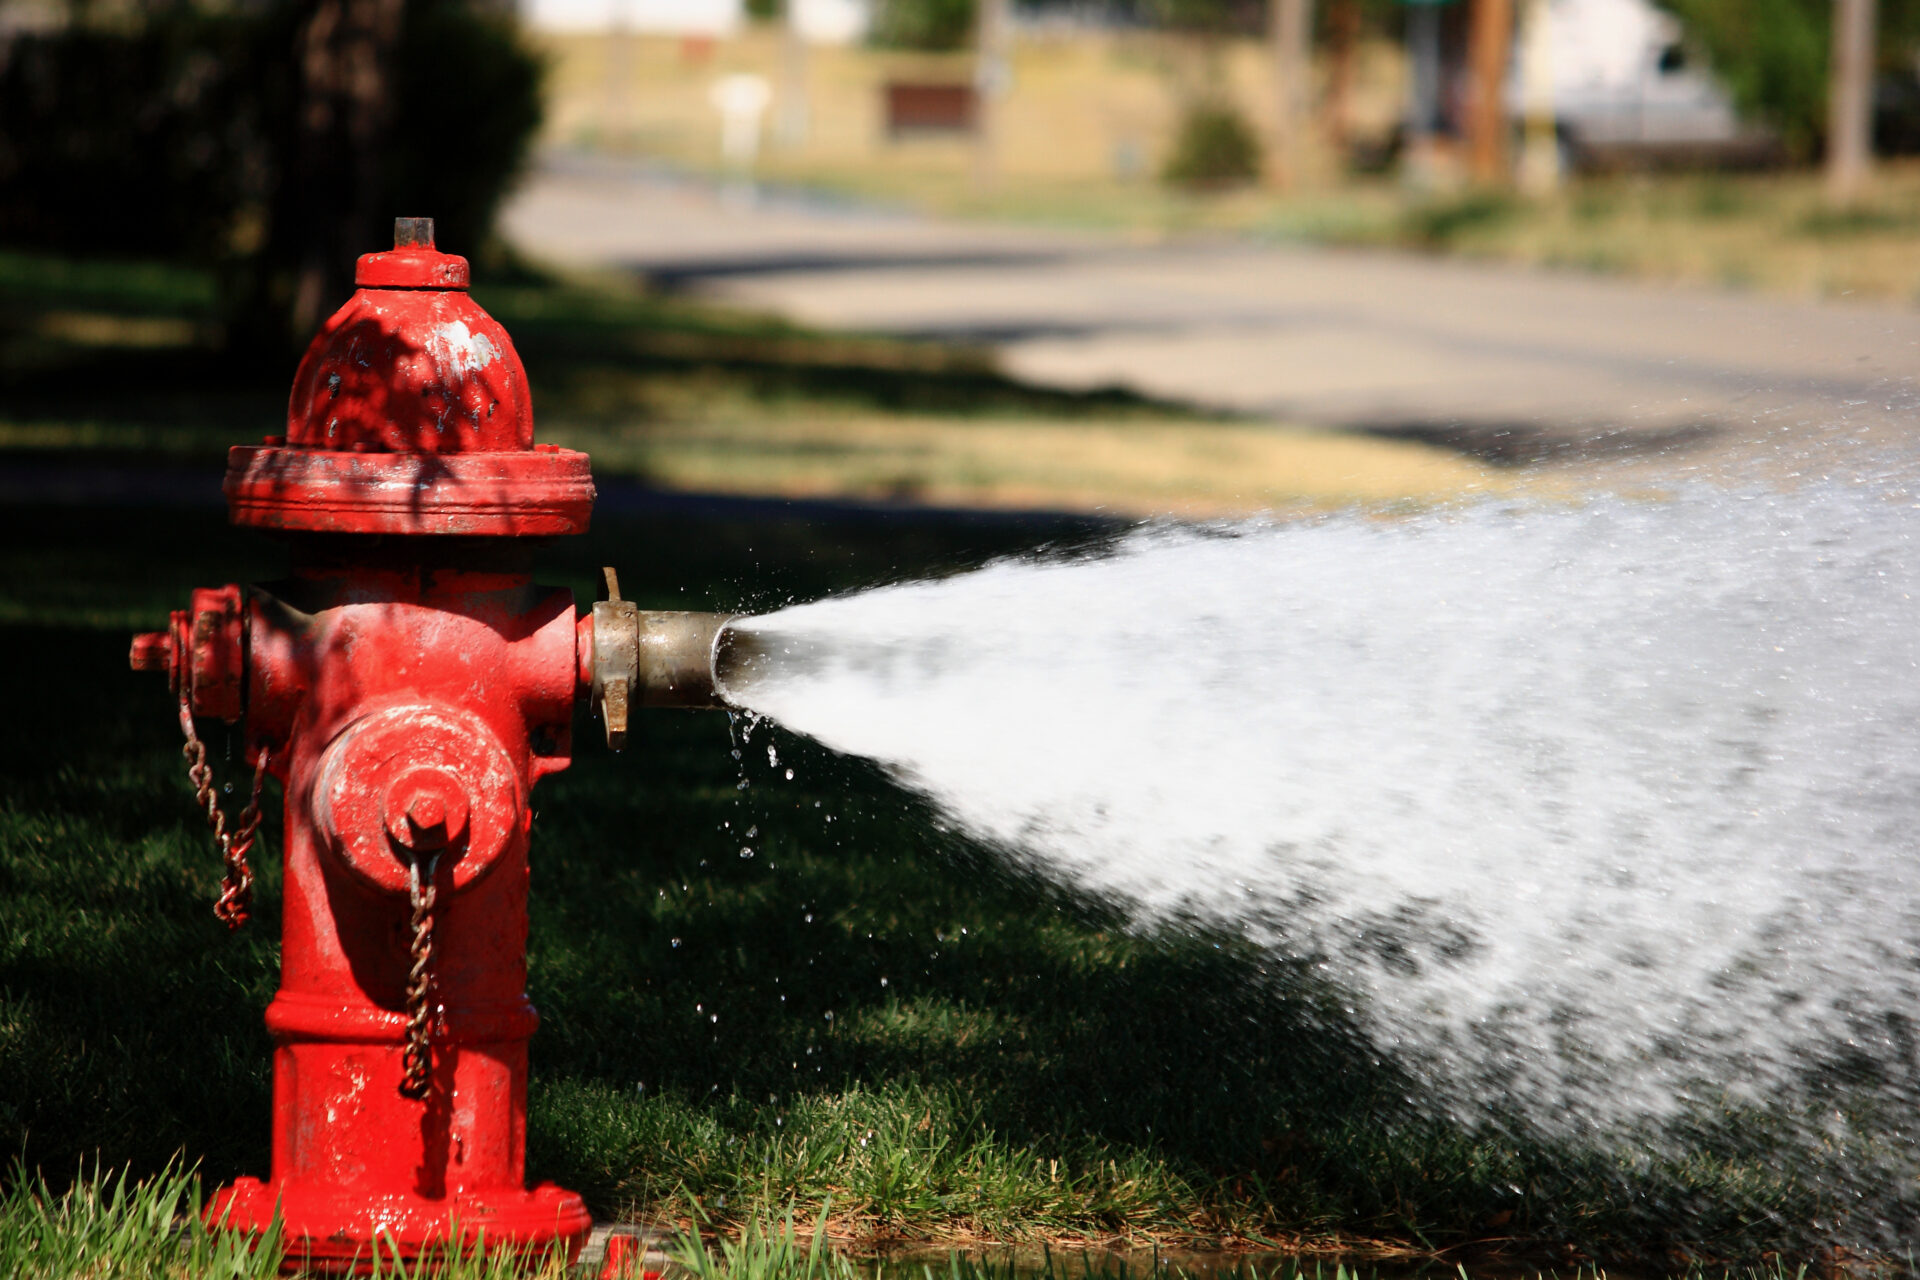 PSC Urges Legislators To Address Fire Hydrant Disrepair